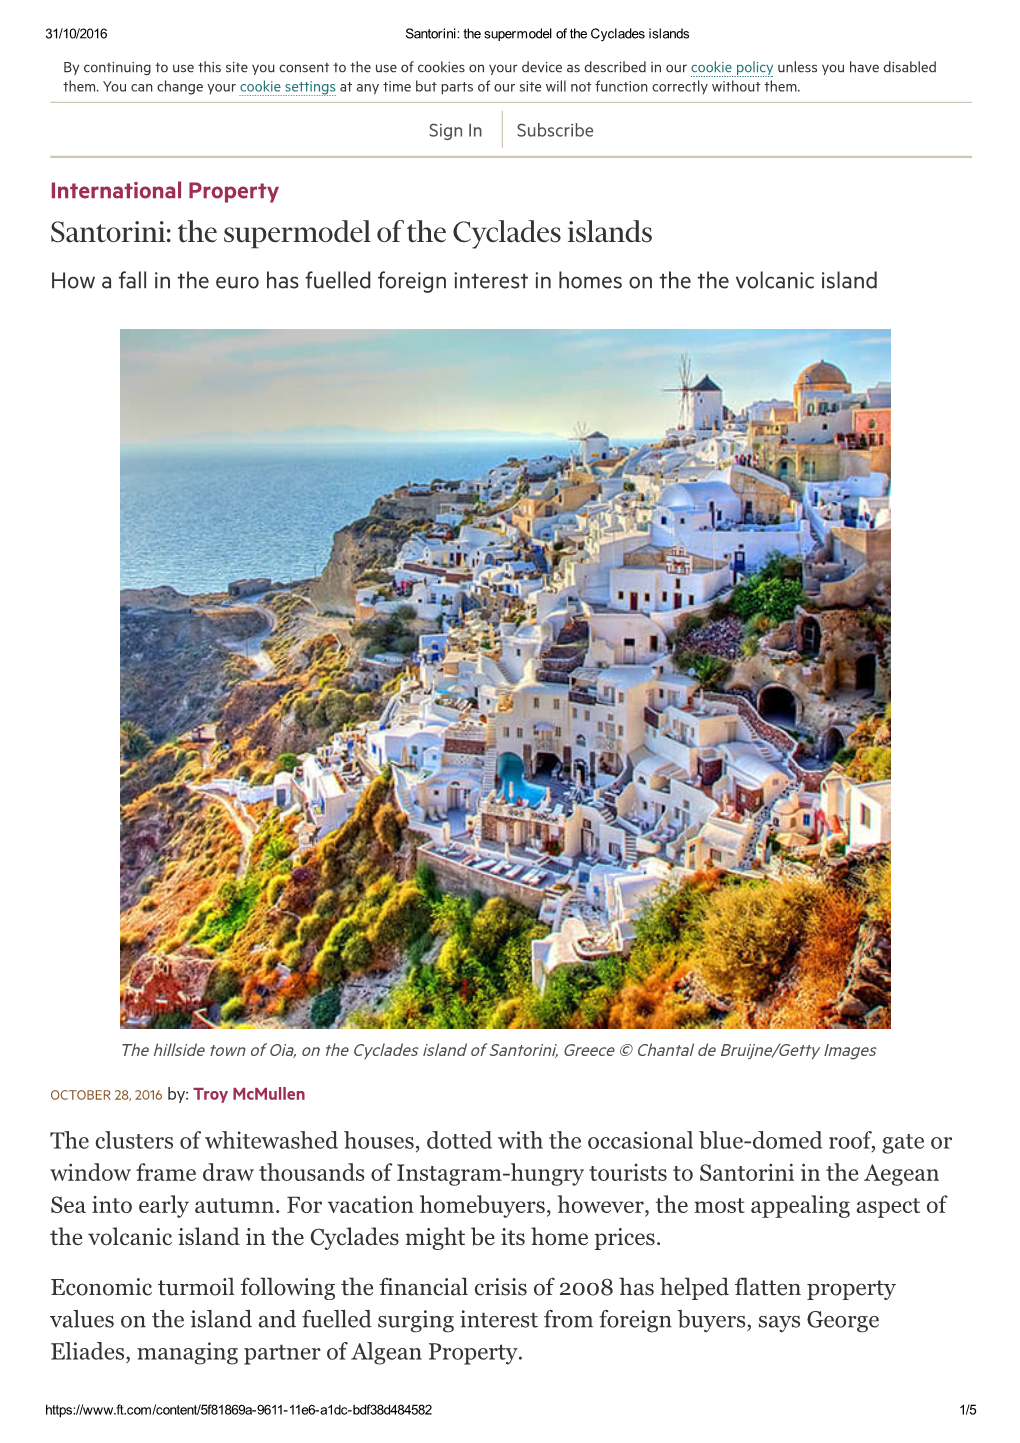 Santorini: the Supermodel of the Cyclades Islands